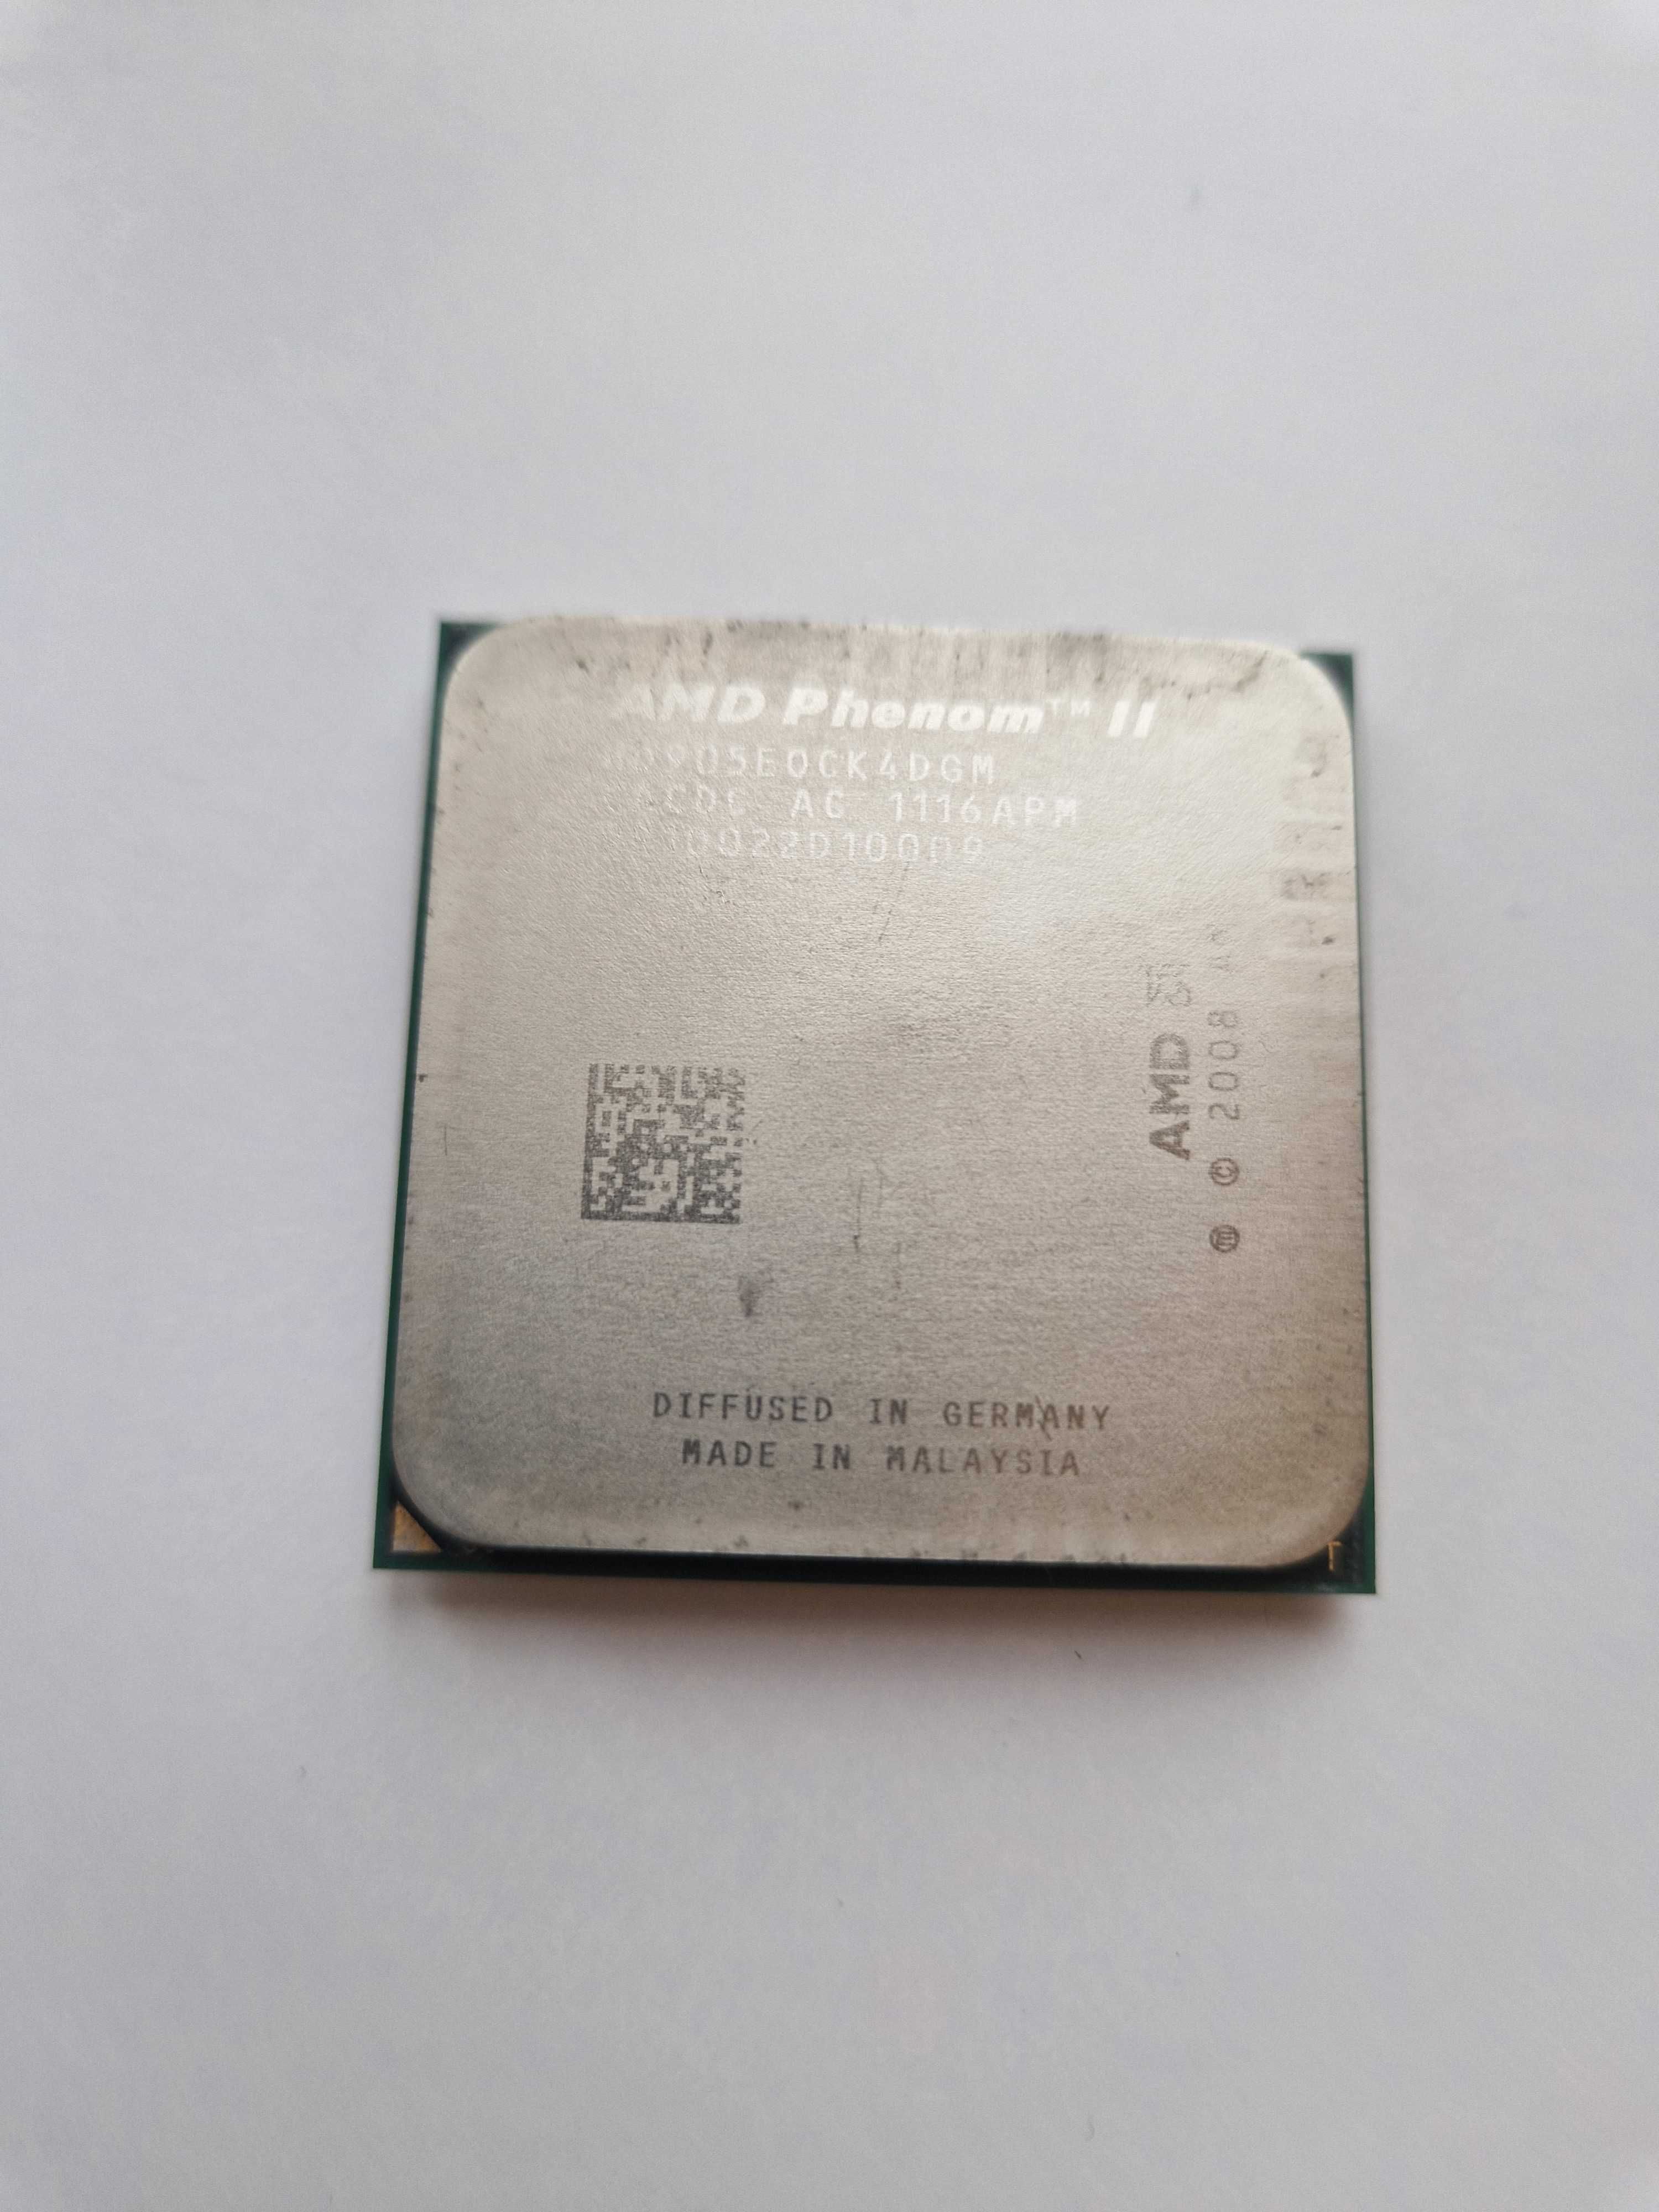 Procesor AMD Phenom II X4 905e